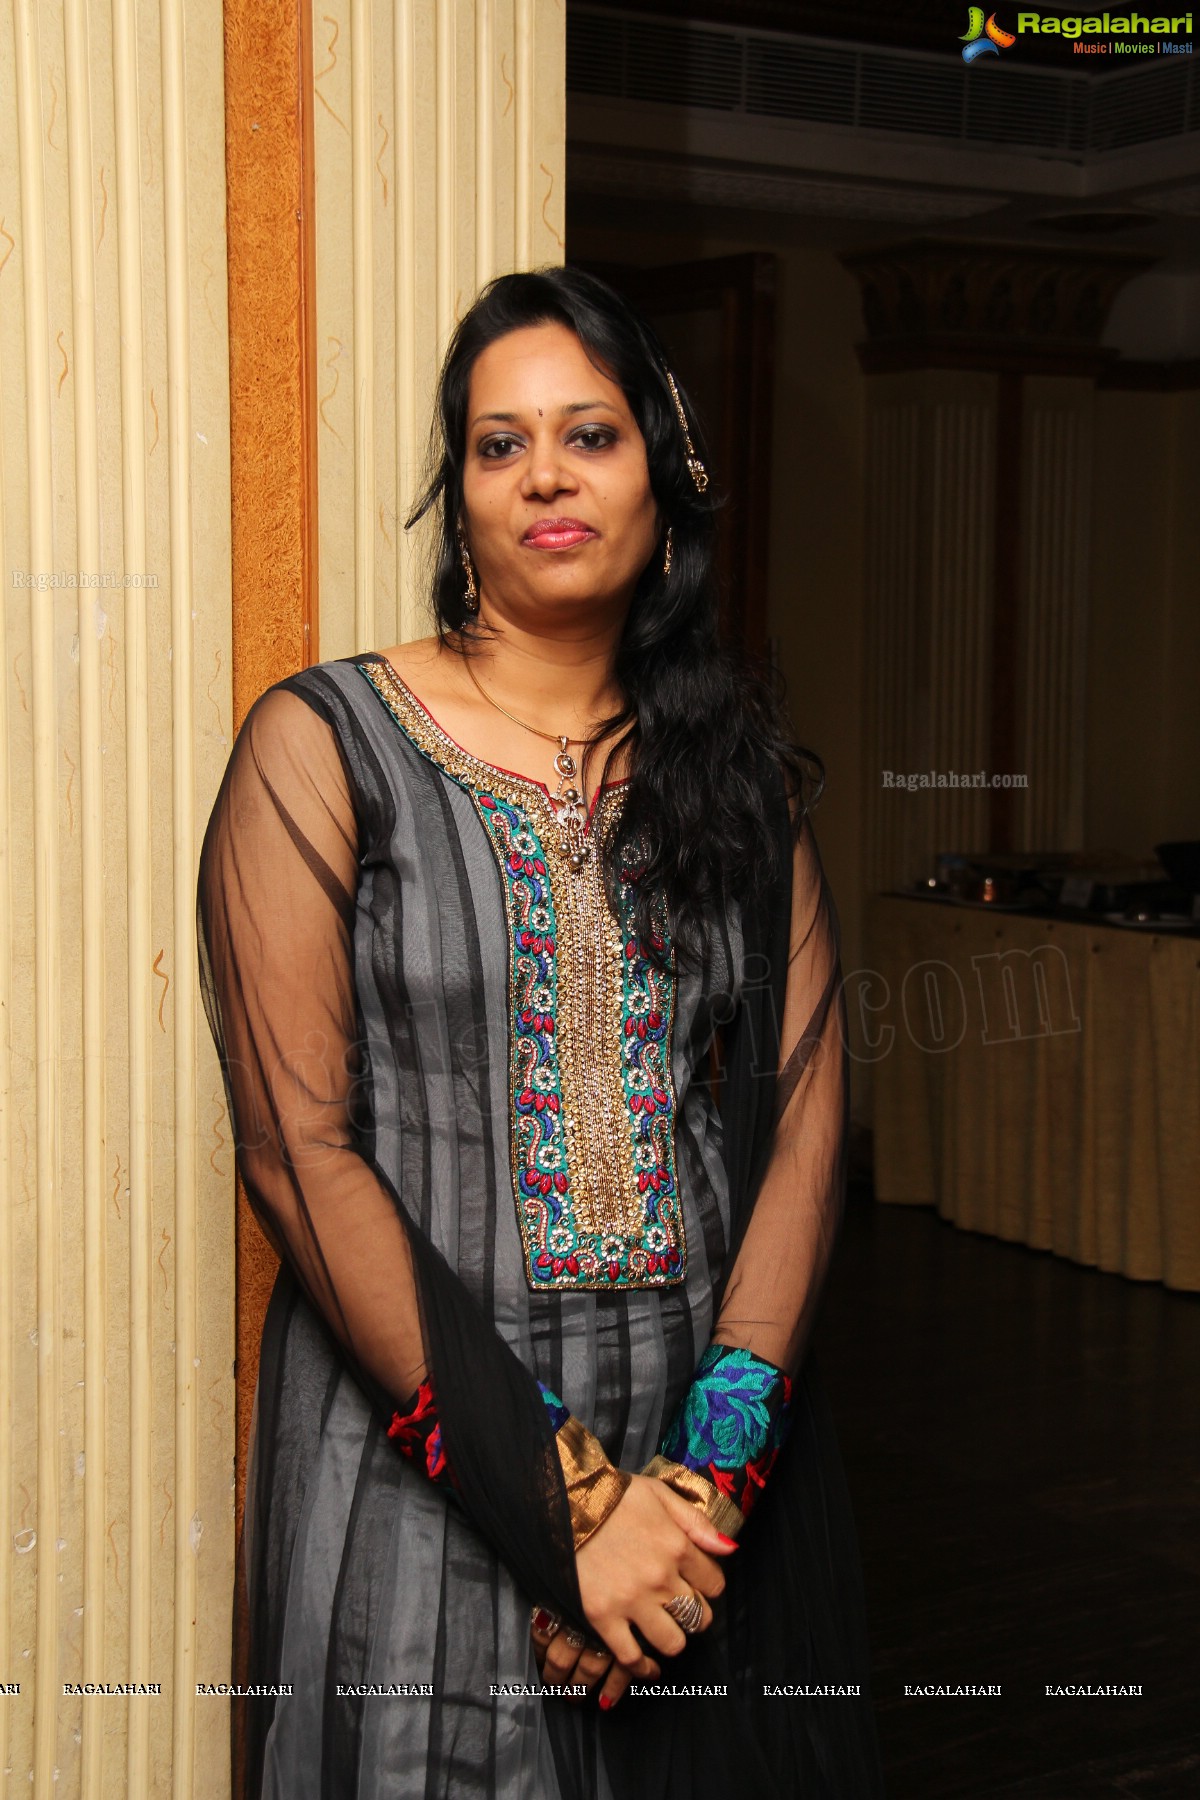 Nite Shades presents Sophie Nites at Quality Inn, Hyderabad - Hosts: Neha & Anita